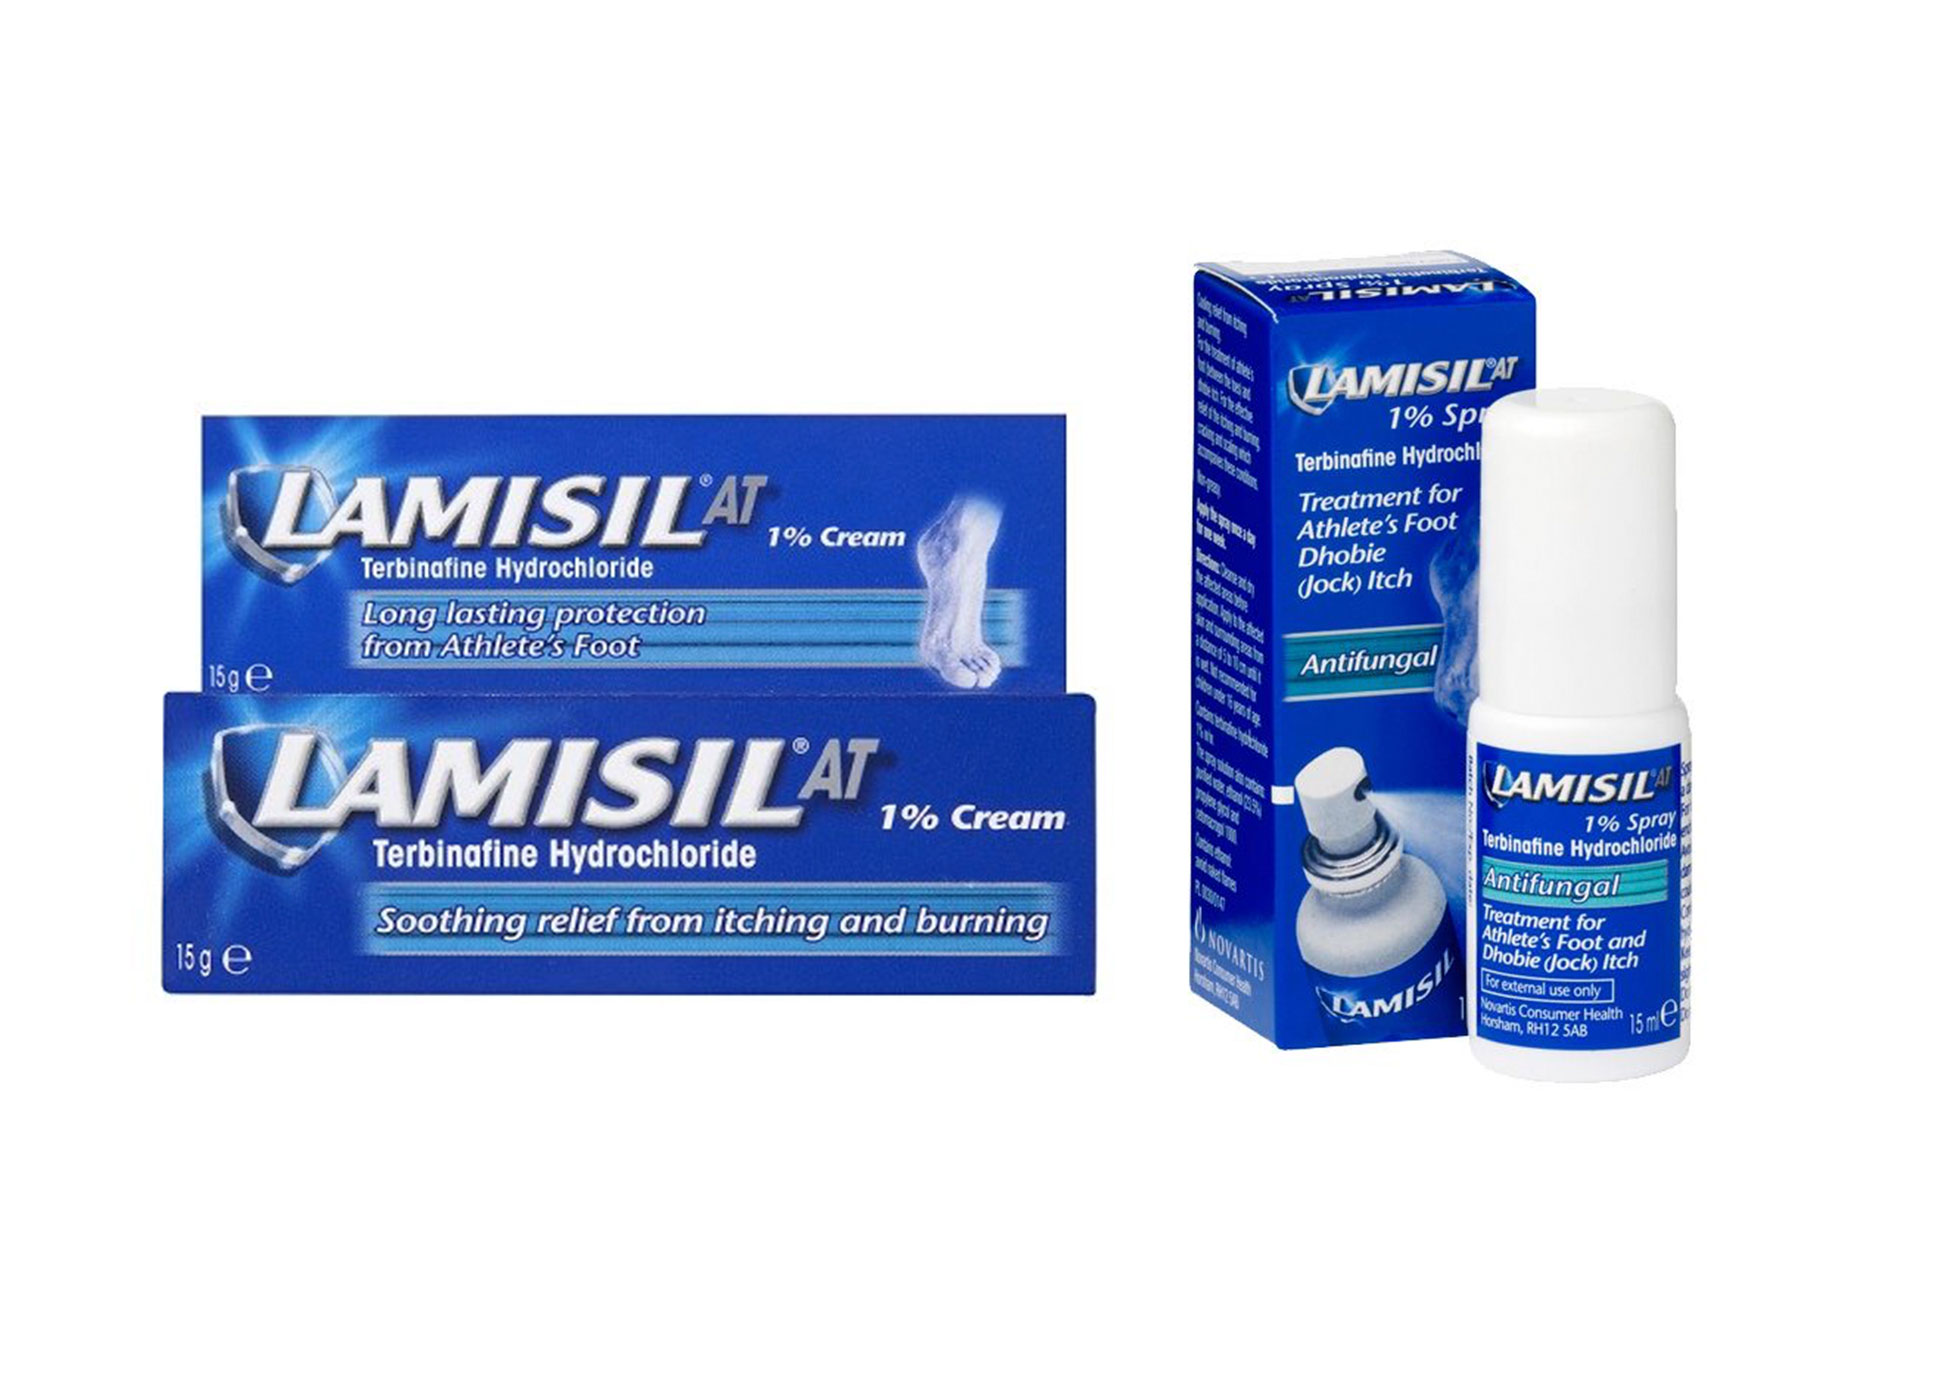 Lamisil 1% AT (Terbinafine Hydrochloride) - Cream 7.5g Tube - Fungal Treatment